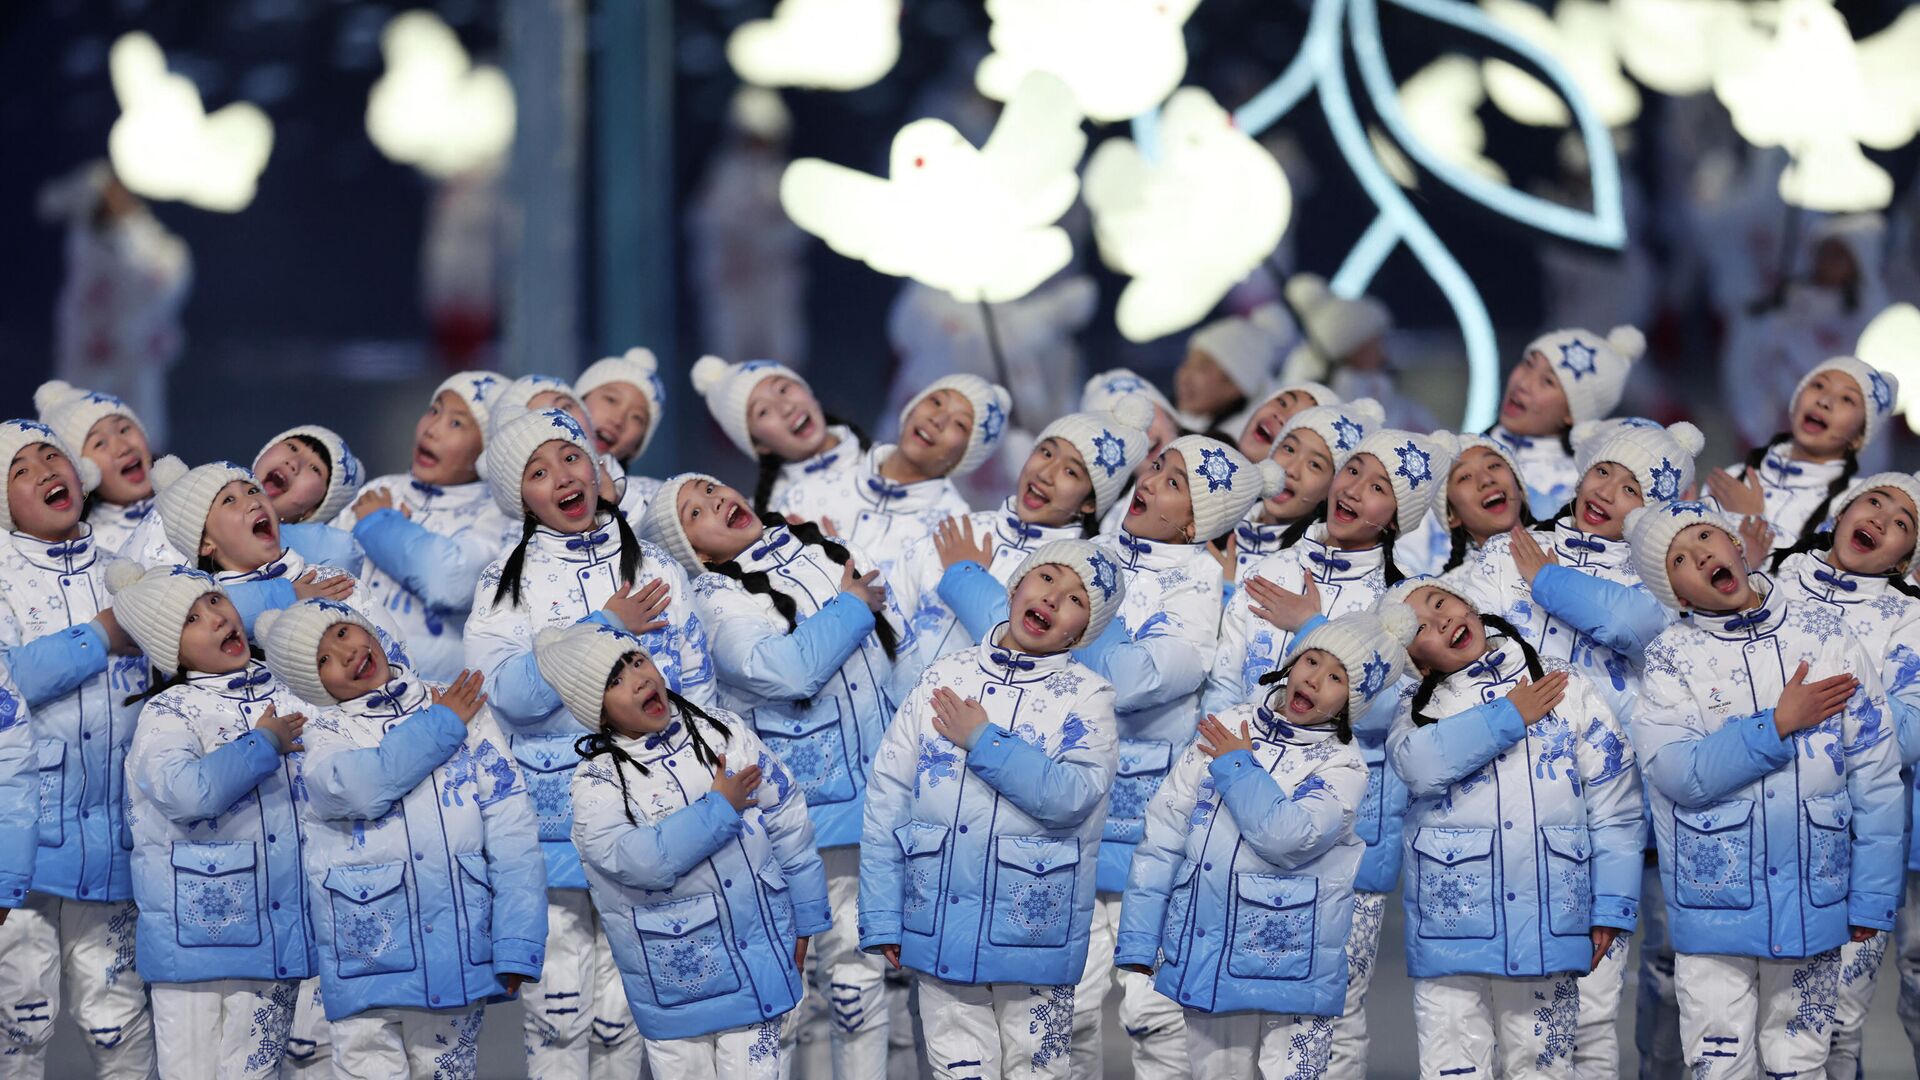 2022 Beijing Olympics - Opening Ceremony - National Stadium, Beijing, China - February 4, 2022. Performers during the opening ceremony.  - Sputnik International, 1920, 04.02.2022